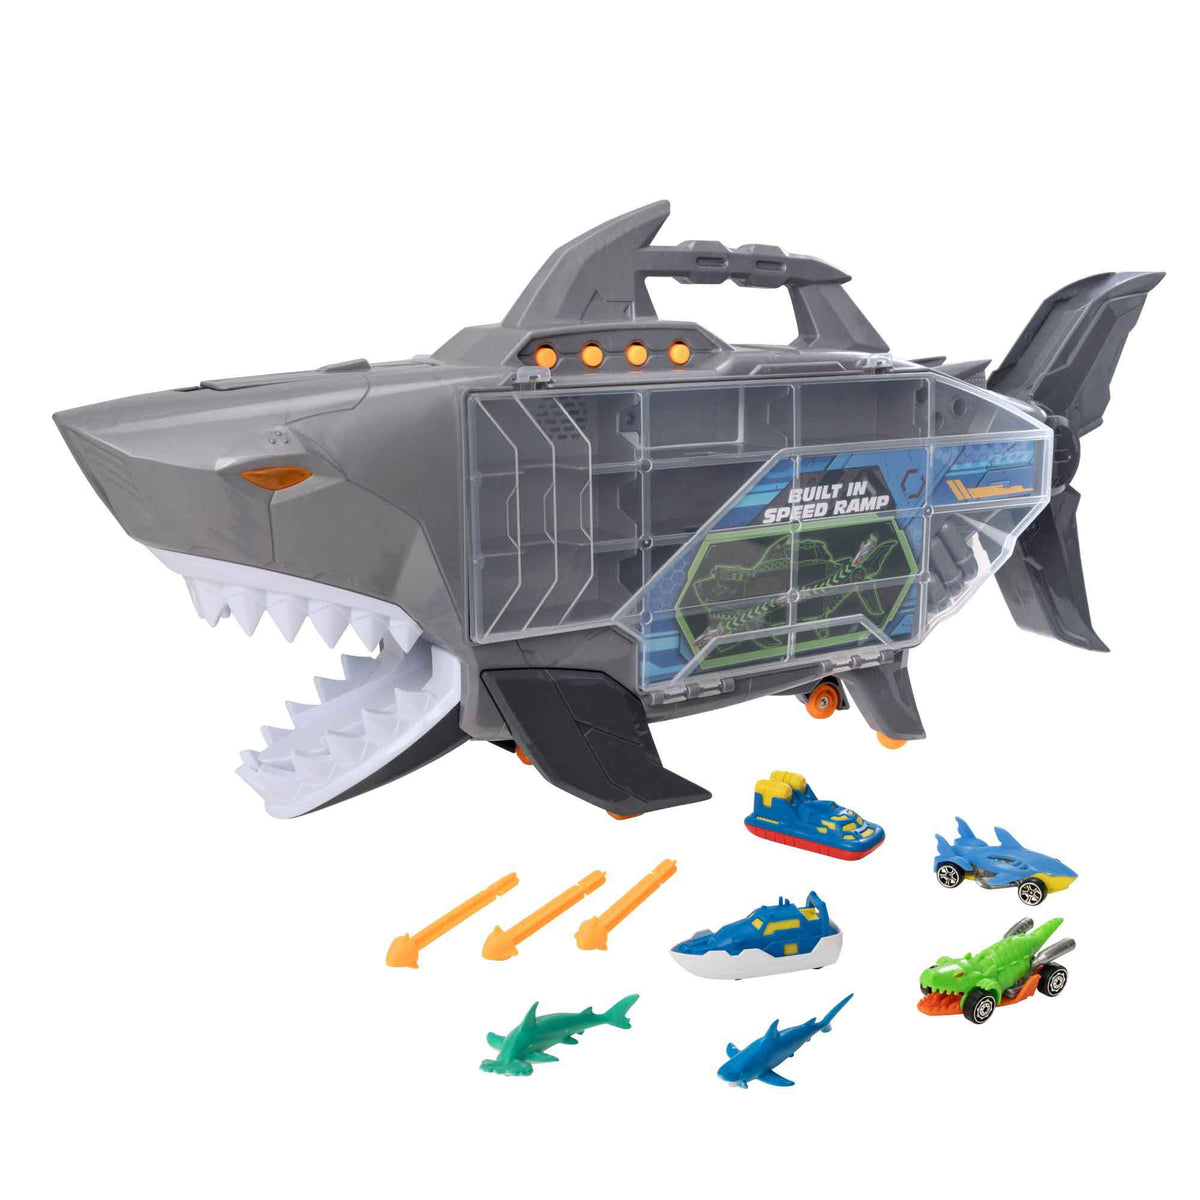 Teamsterz Beast Machines Robo Shark Transporter